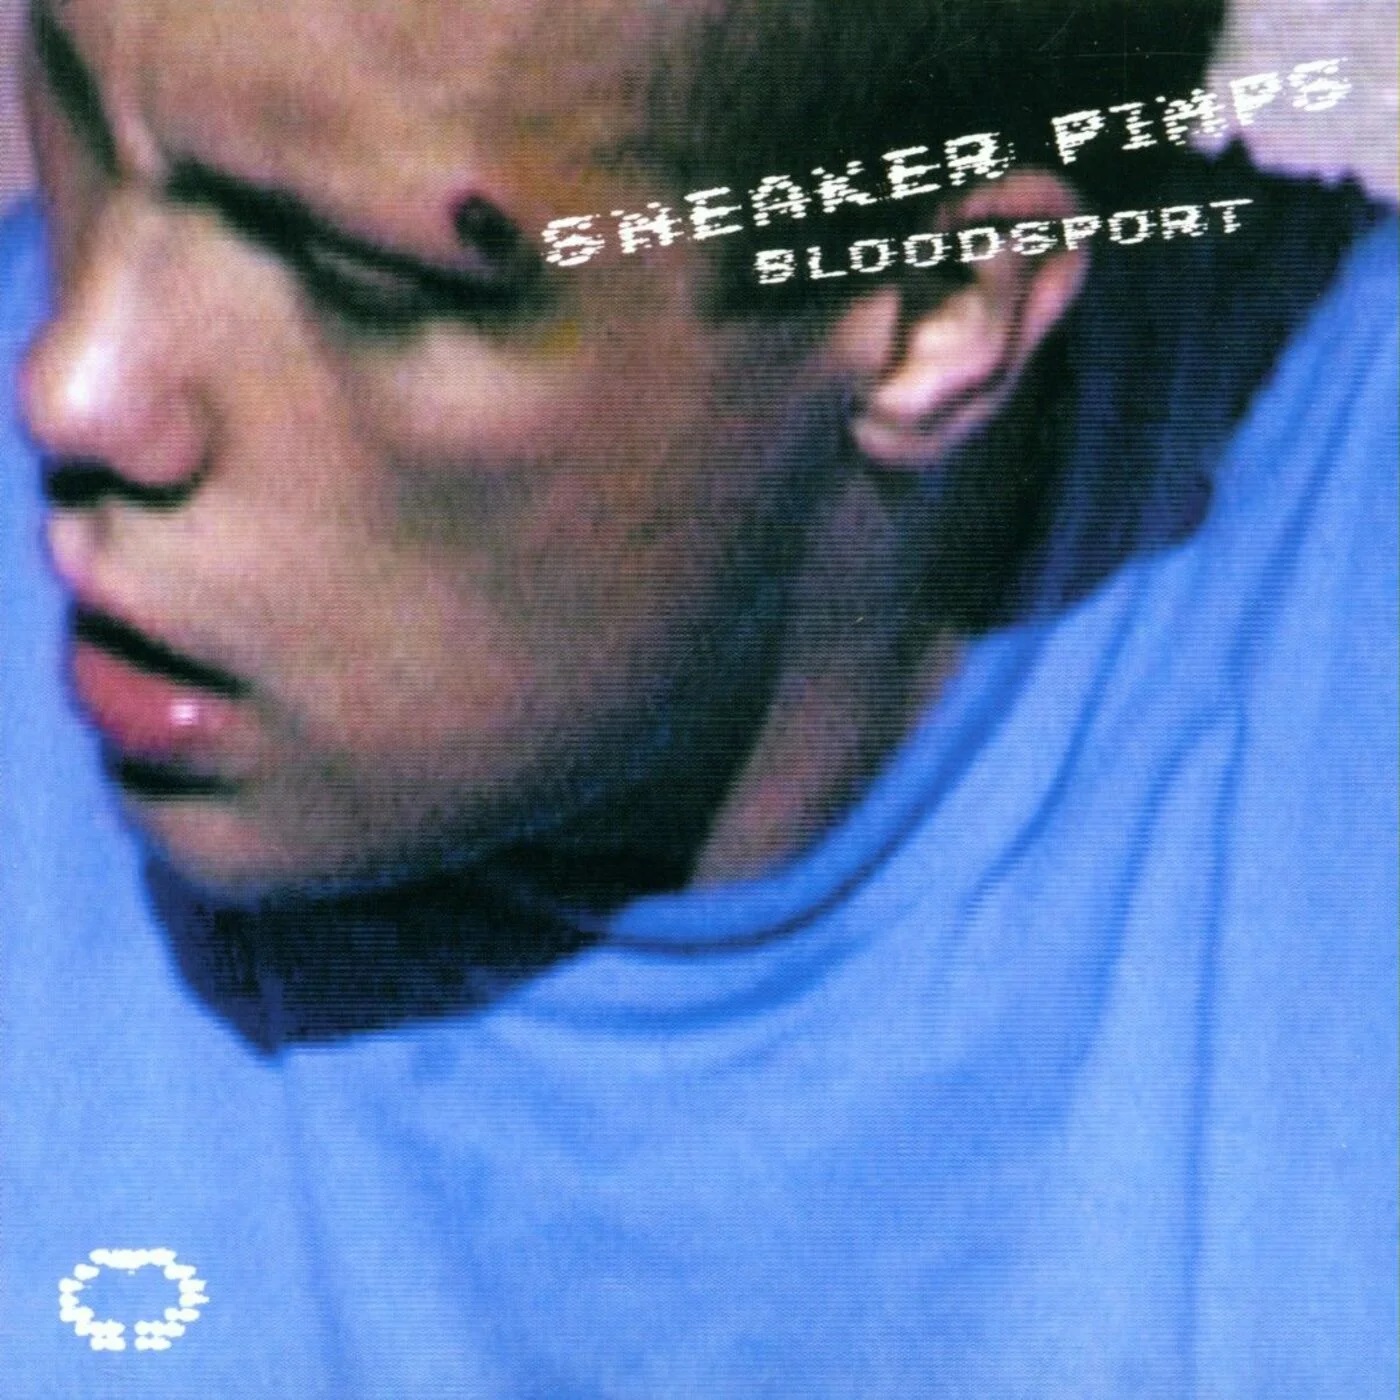 Sneaker Pimps Bloodsport cover artwork